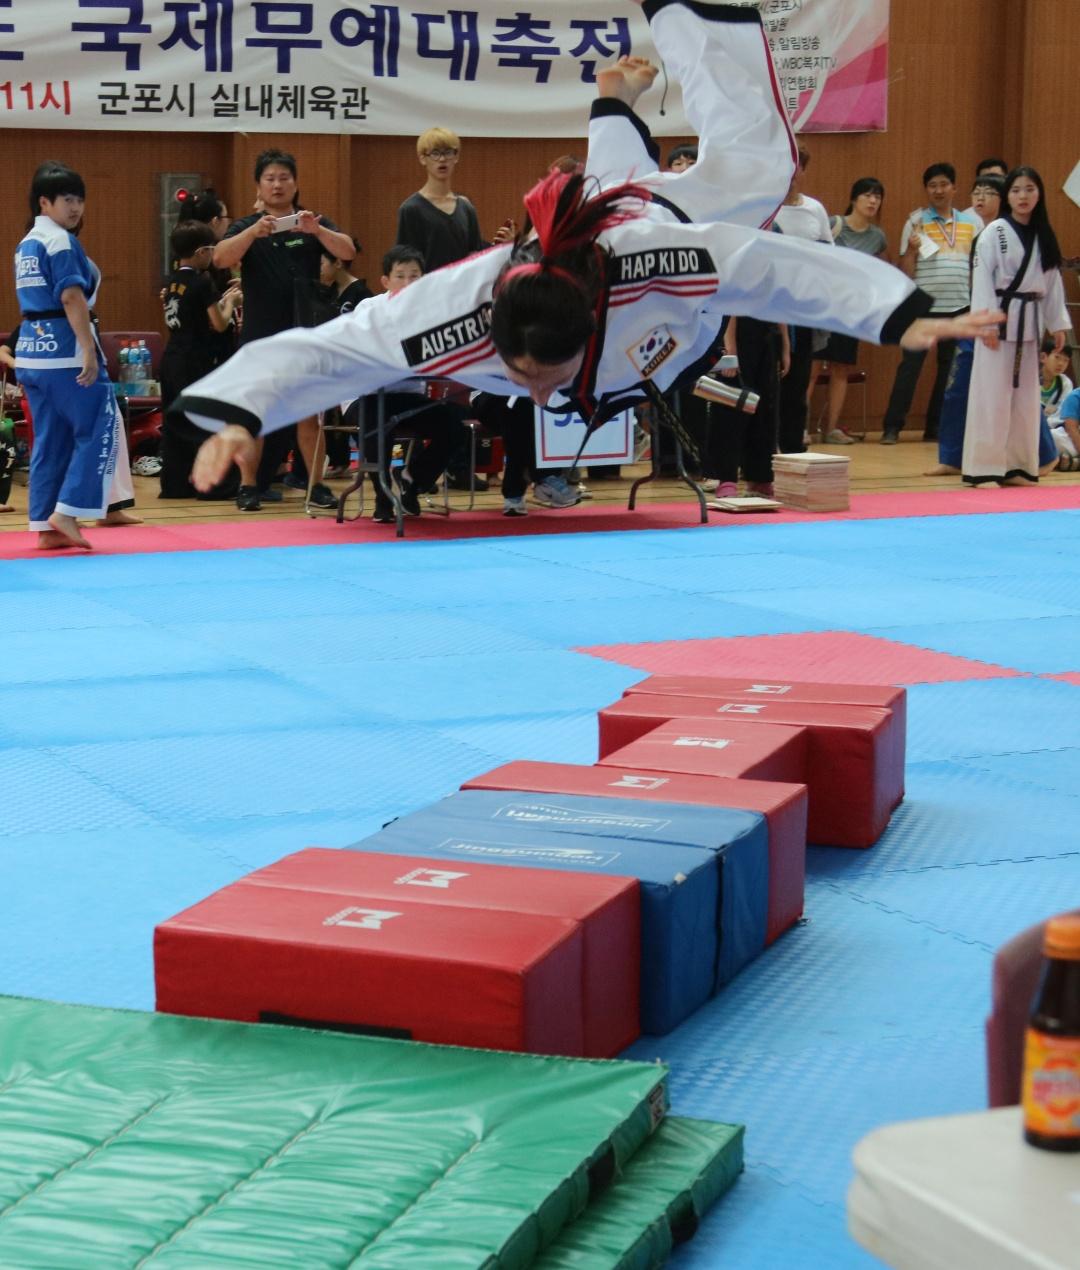 Hapkido - Fallschule (Nakbob). Internationale Meisterschaften in Korea, 2016. Hapkido ist eine koreanische Kampfkunst zur Selbstverteidigung.